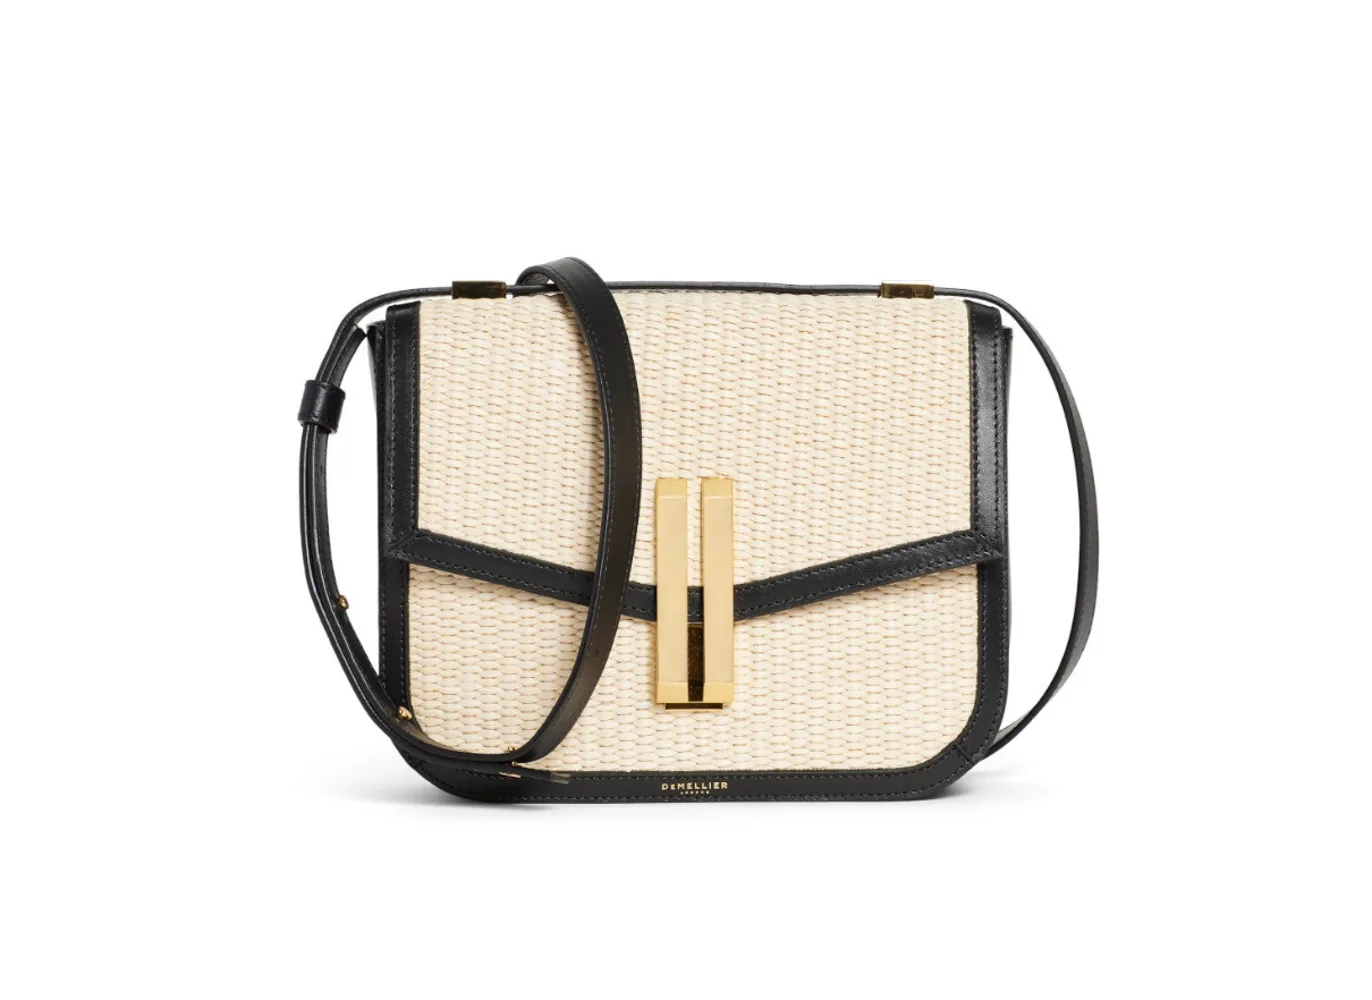 Bento Box BB  Rent A Louis Vuitton Handbag at Luxury Fashion Rental